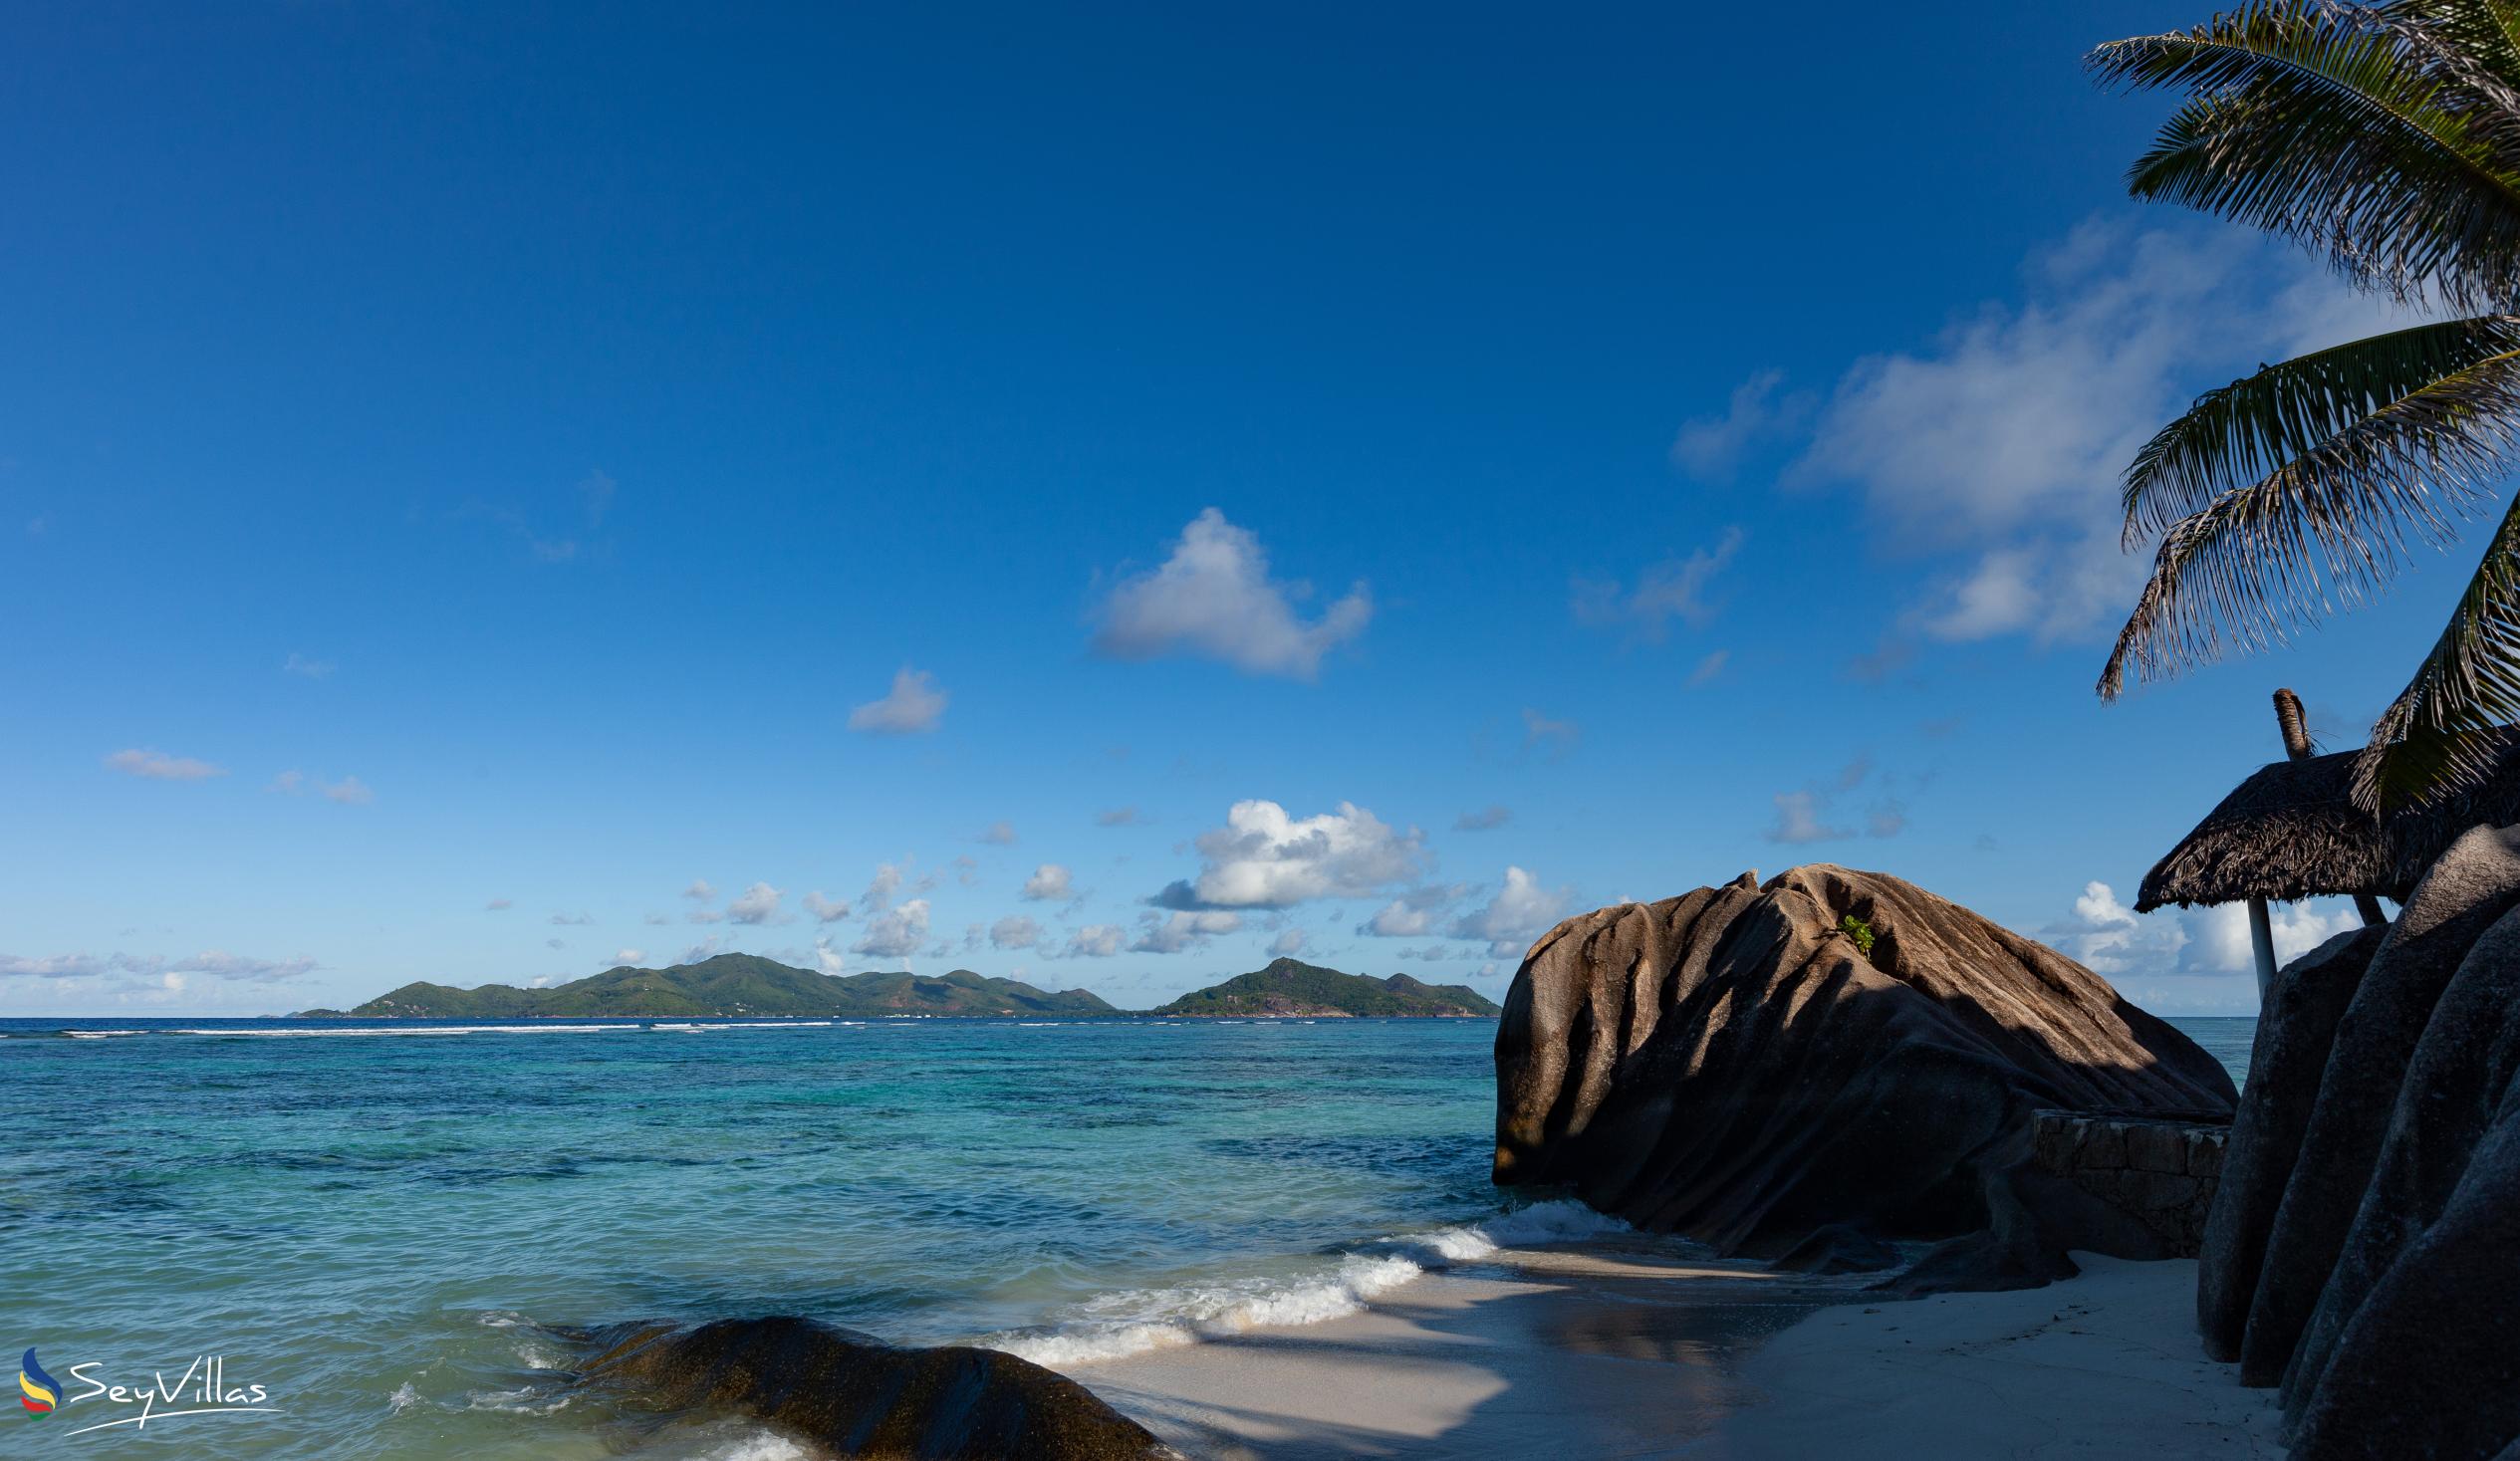 Photo 85: Ambiance Villa - Location - La Digue (Seychelles)